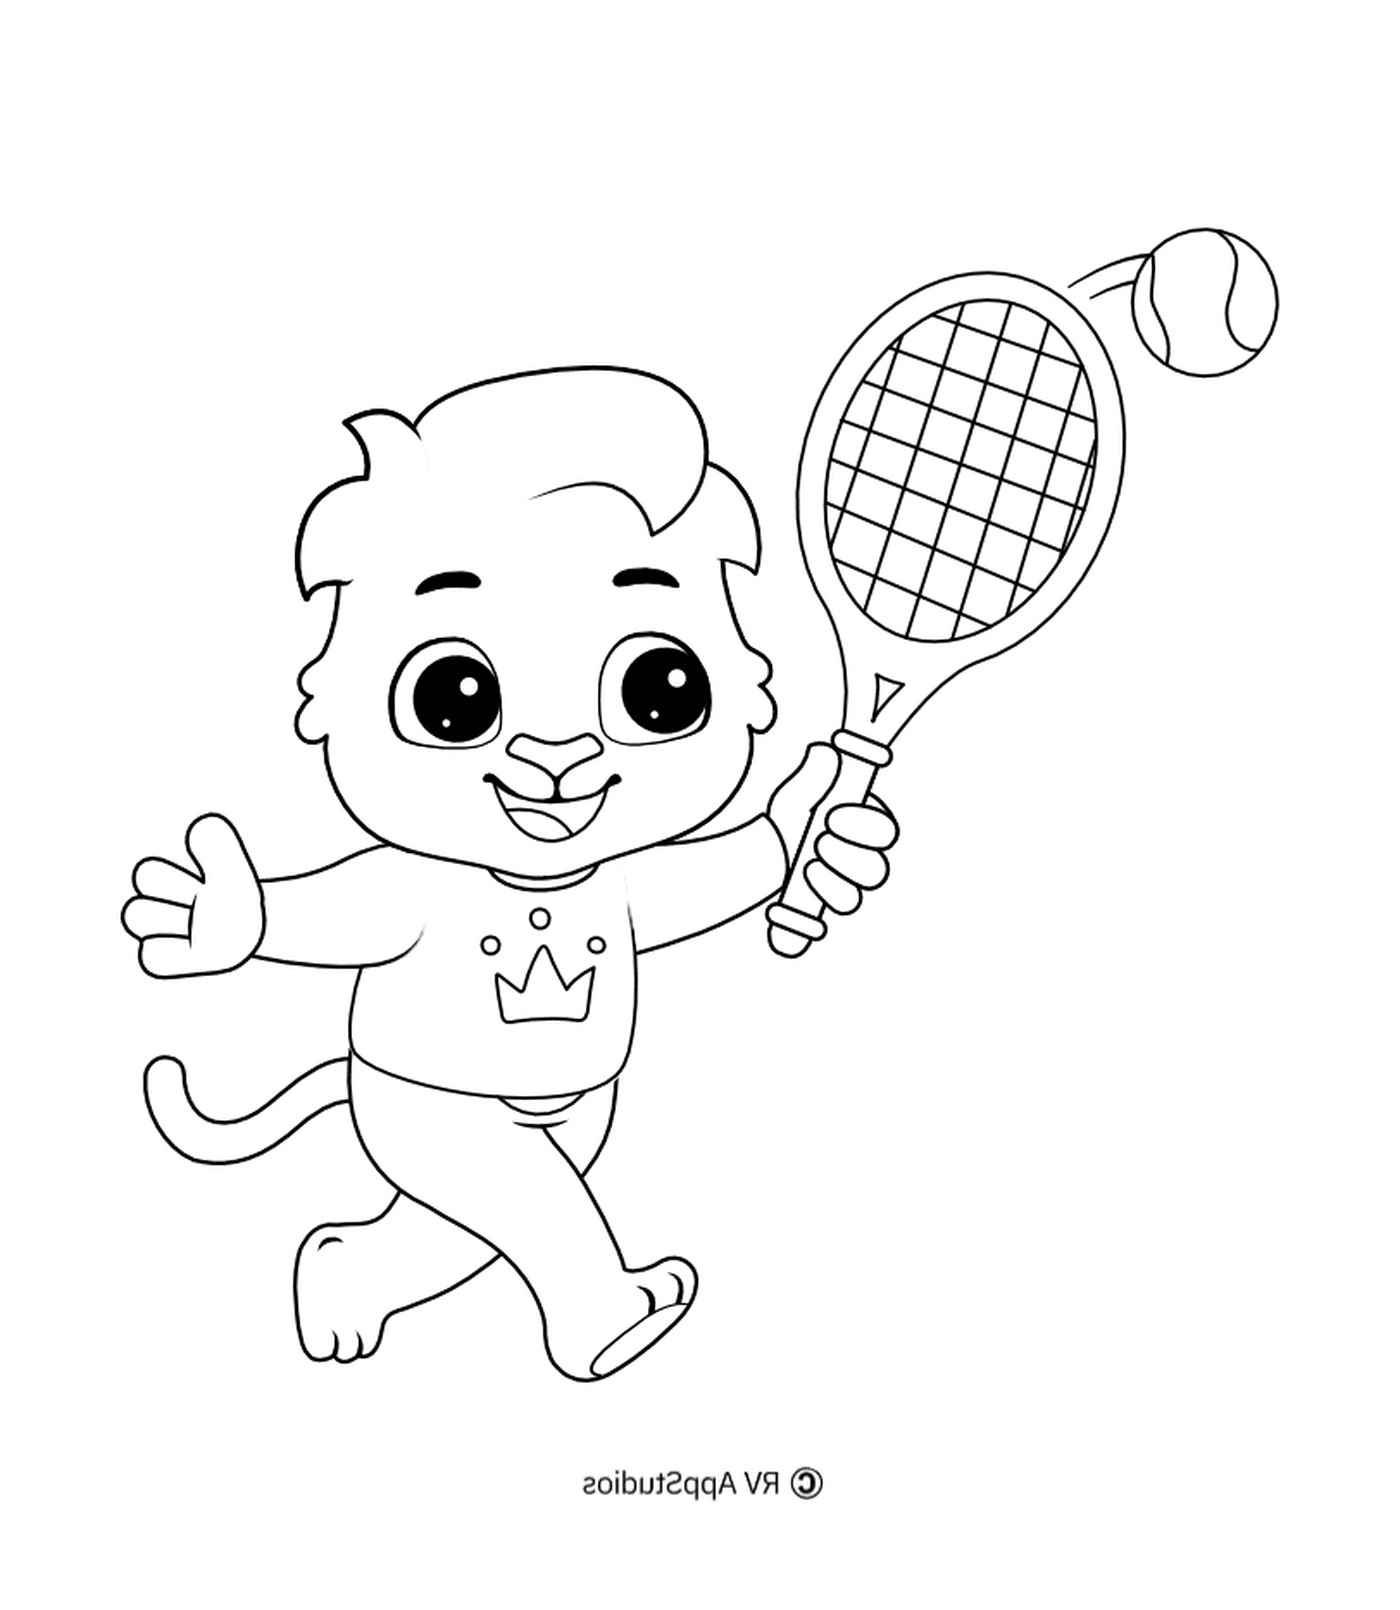  A child tennis player 